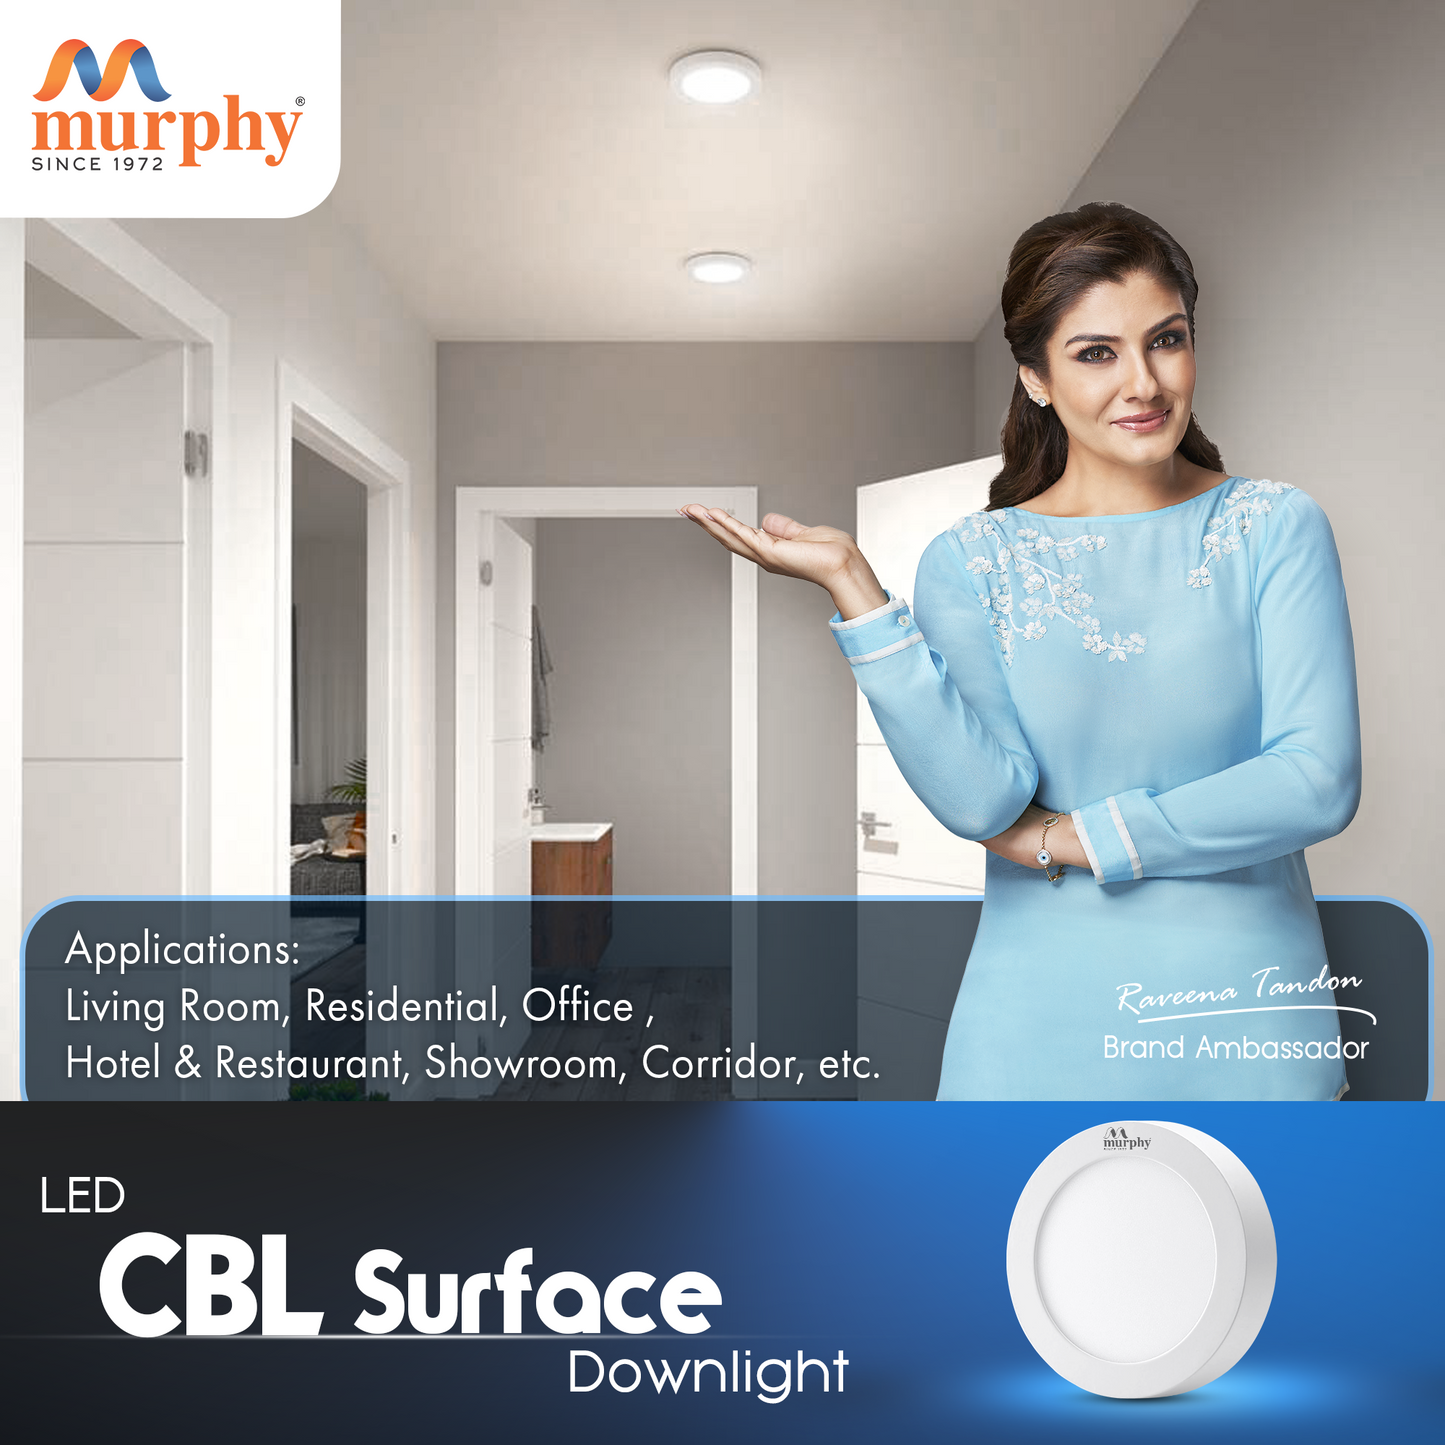 Murphy 15W CBL LED Surface Down Light